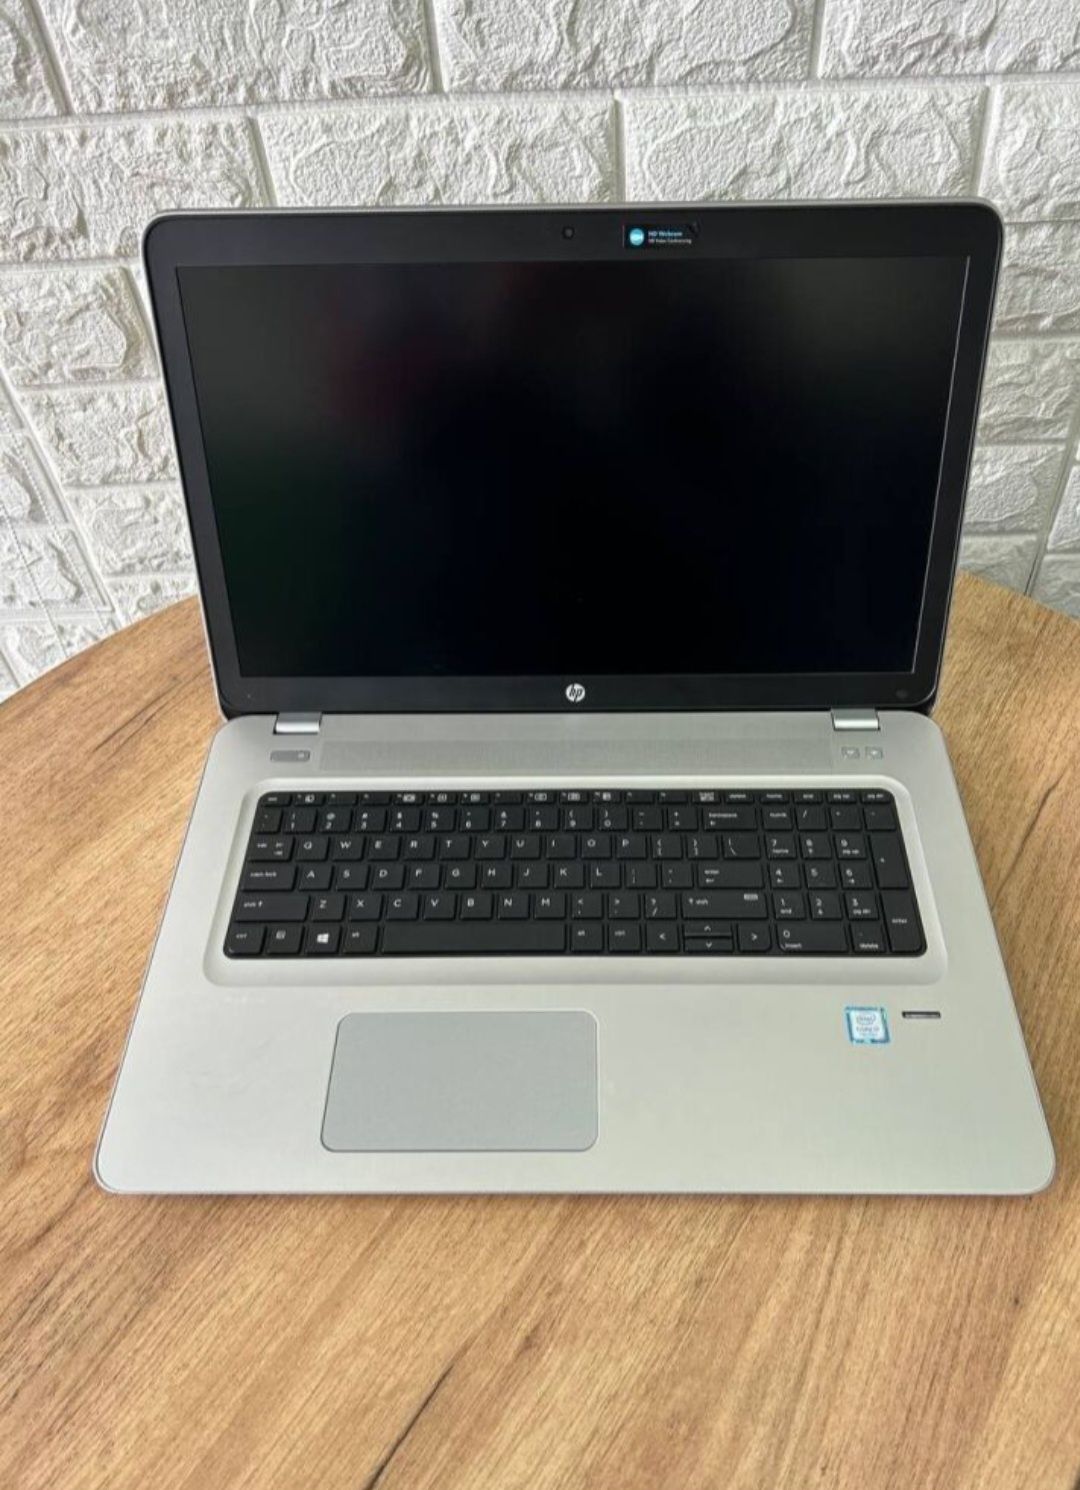 HP ProBook 470 G4 i7, LCD 17.3 FHD, 8GB DDR4 RAM, 256GB SSD + 1TB HDD